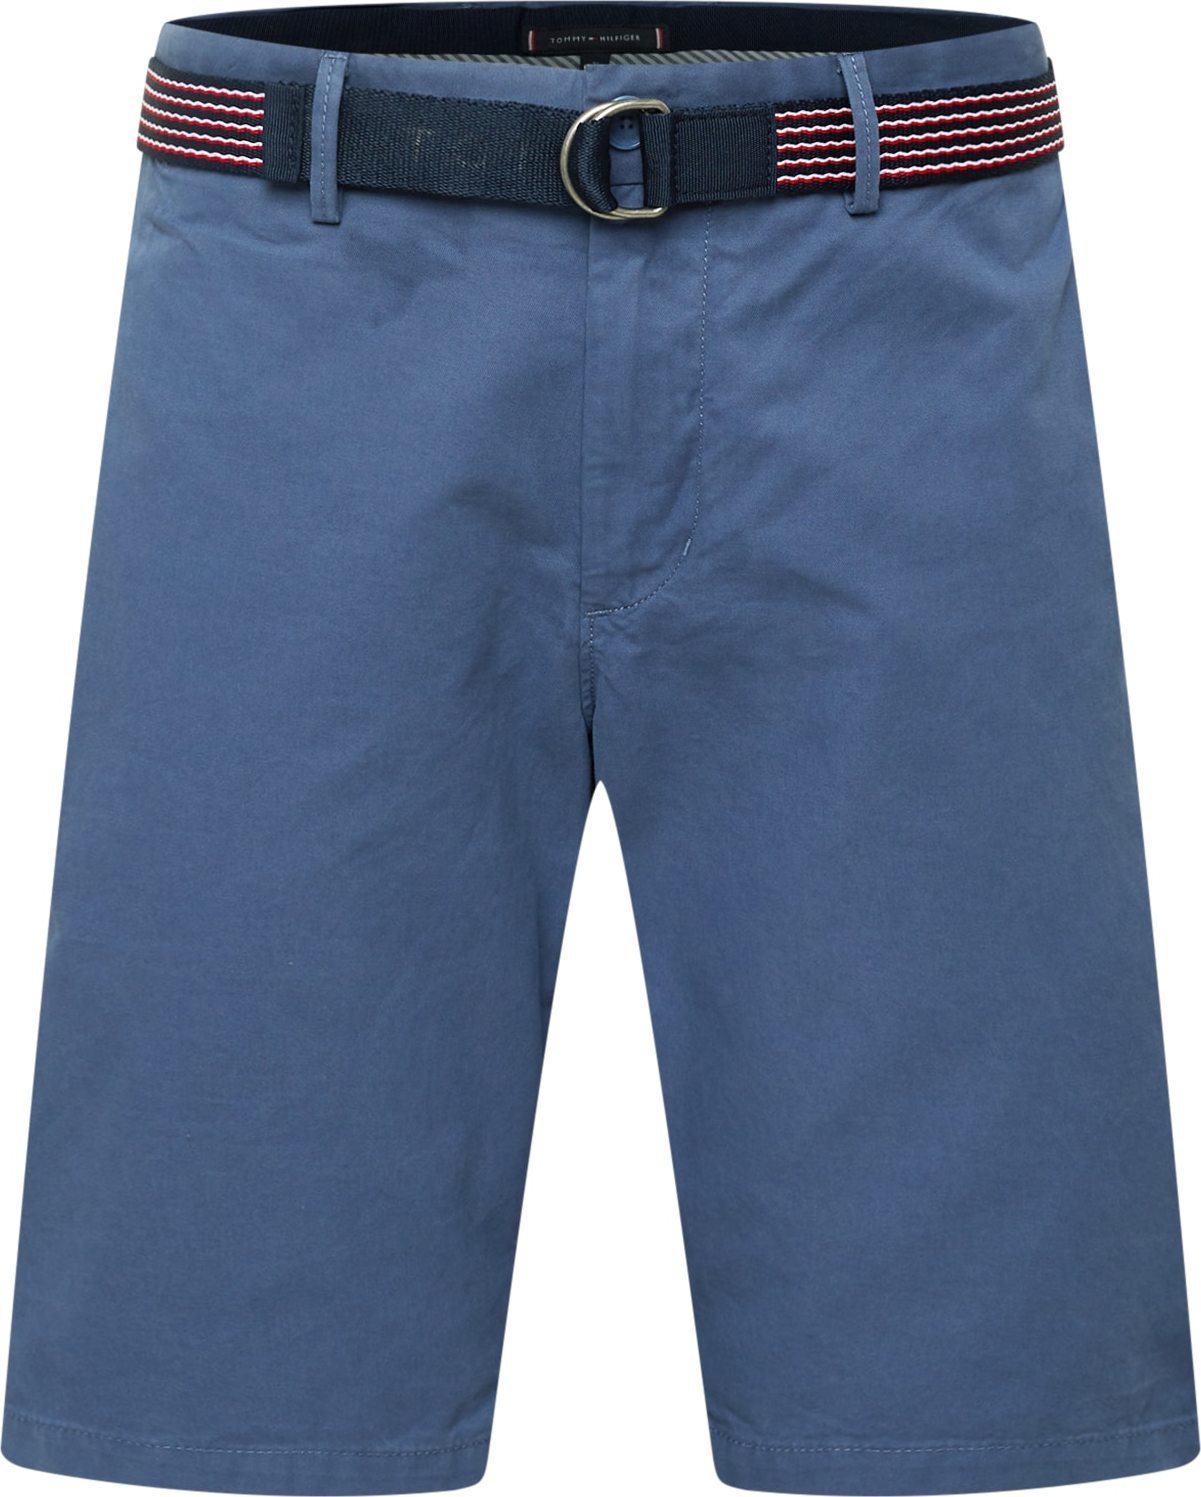 TOMMY HILFIGER Kalhoty 'Harlem' marine modrá / červená / bílá